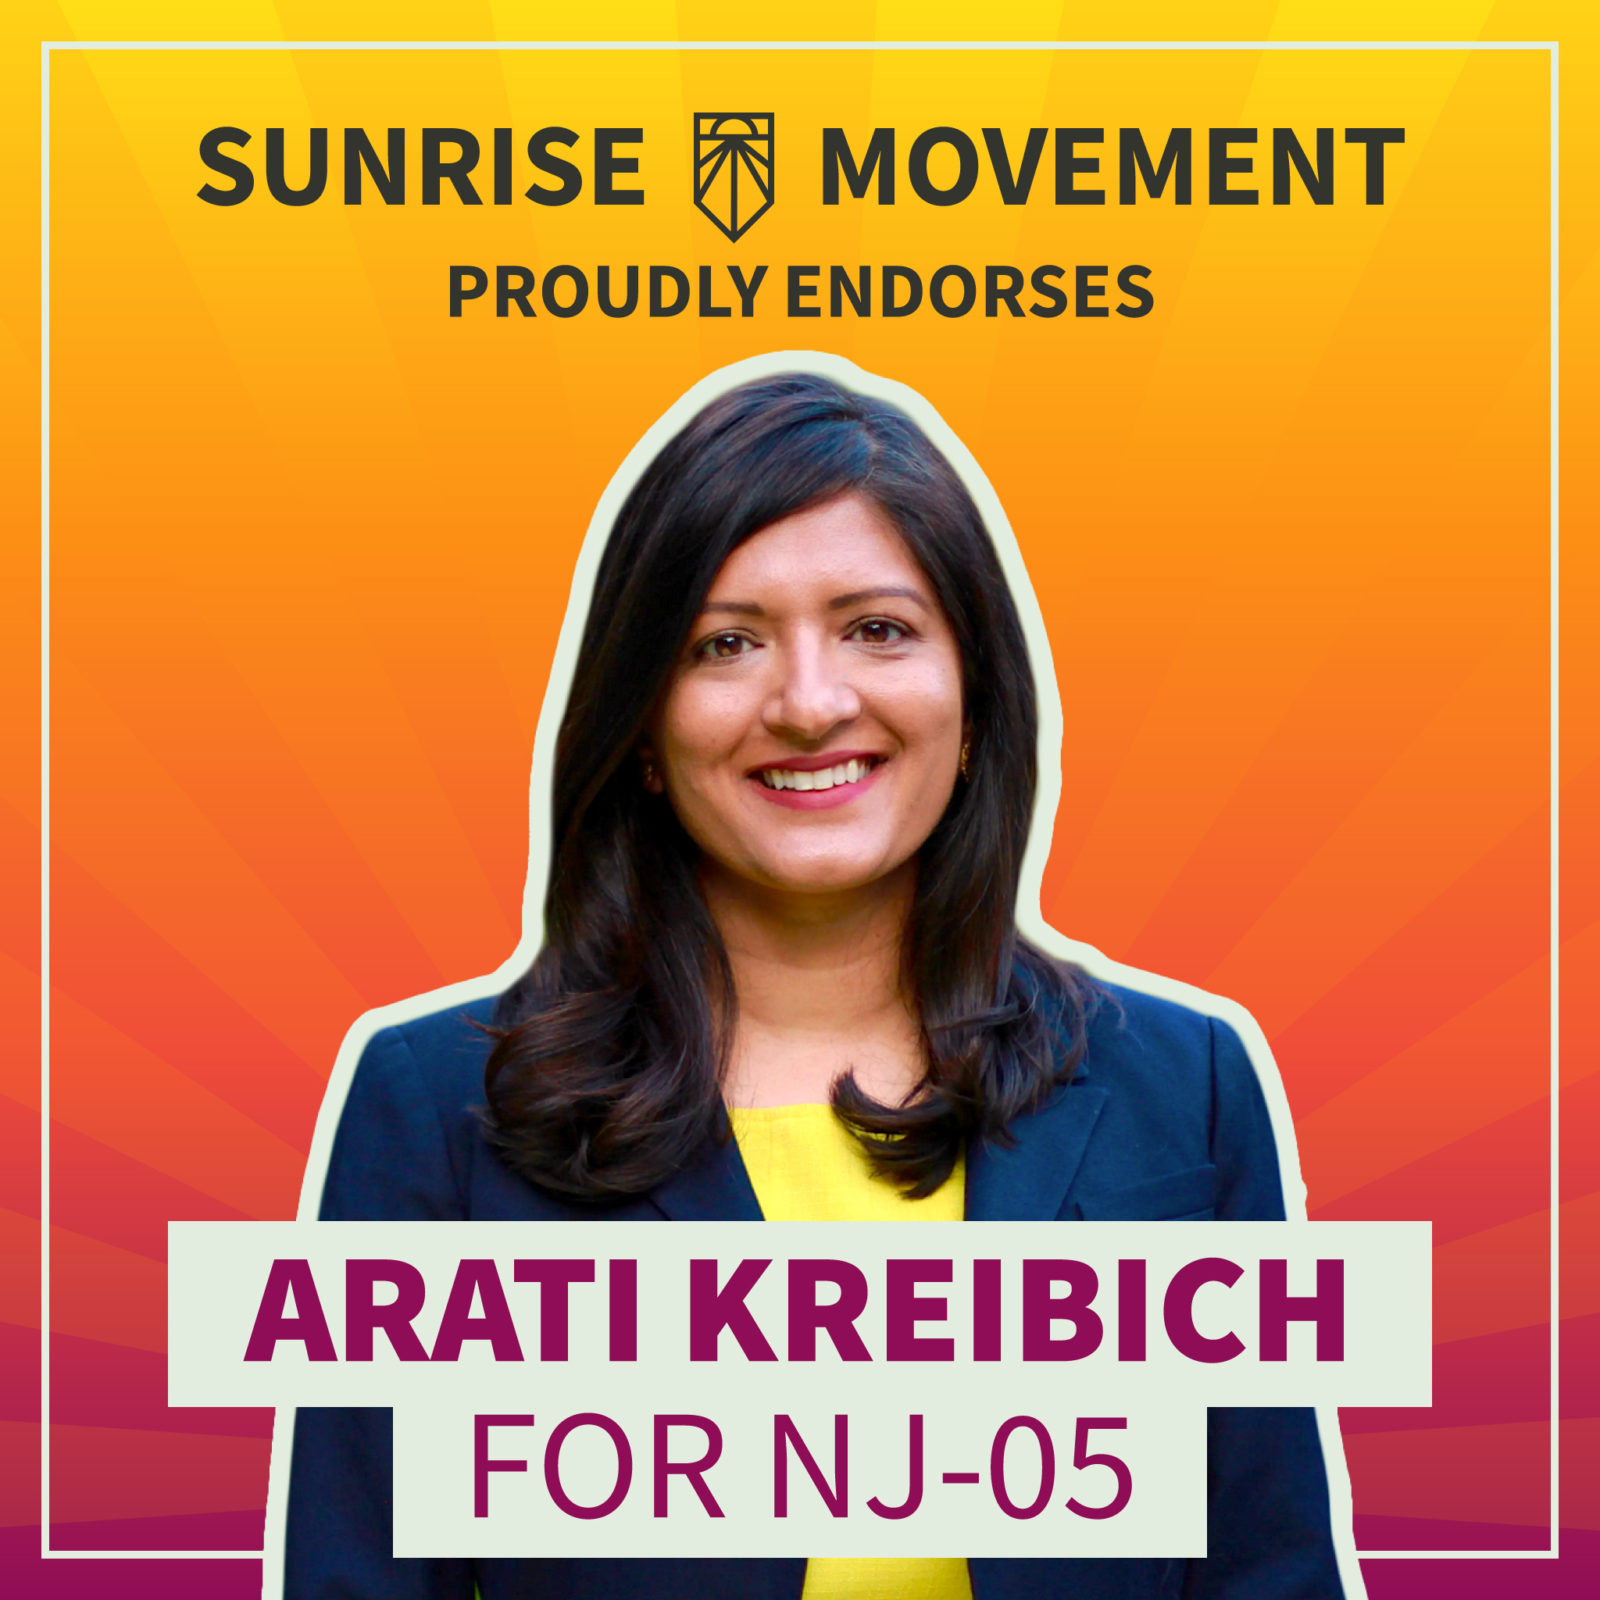 A photo of Arati Kreibich with text: Sunrise Movement proudly endorses Arati Kreibich for NJ-05